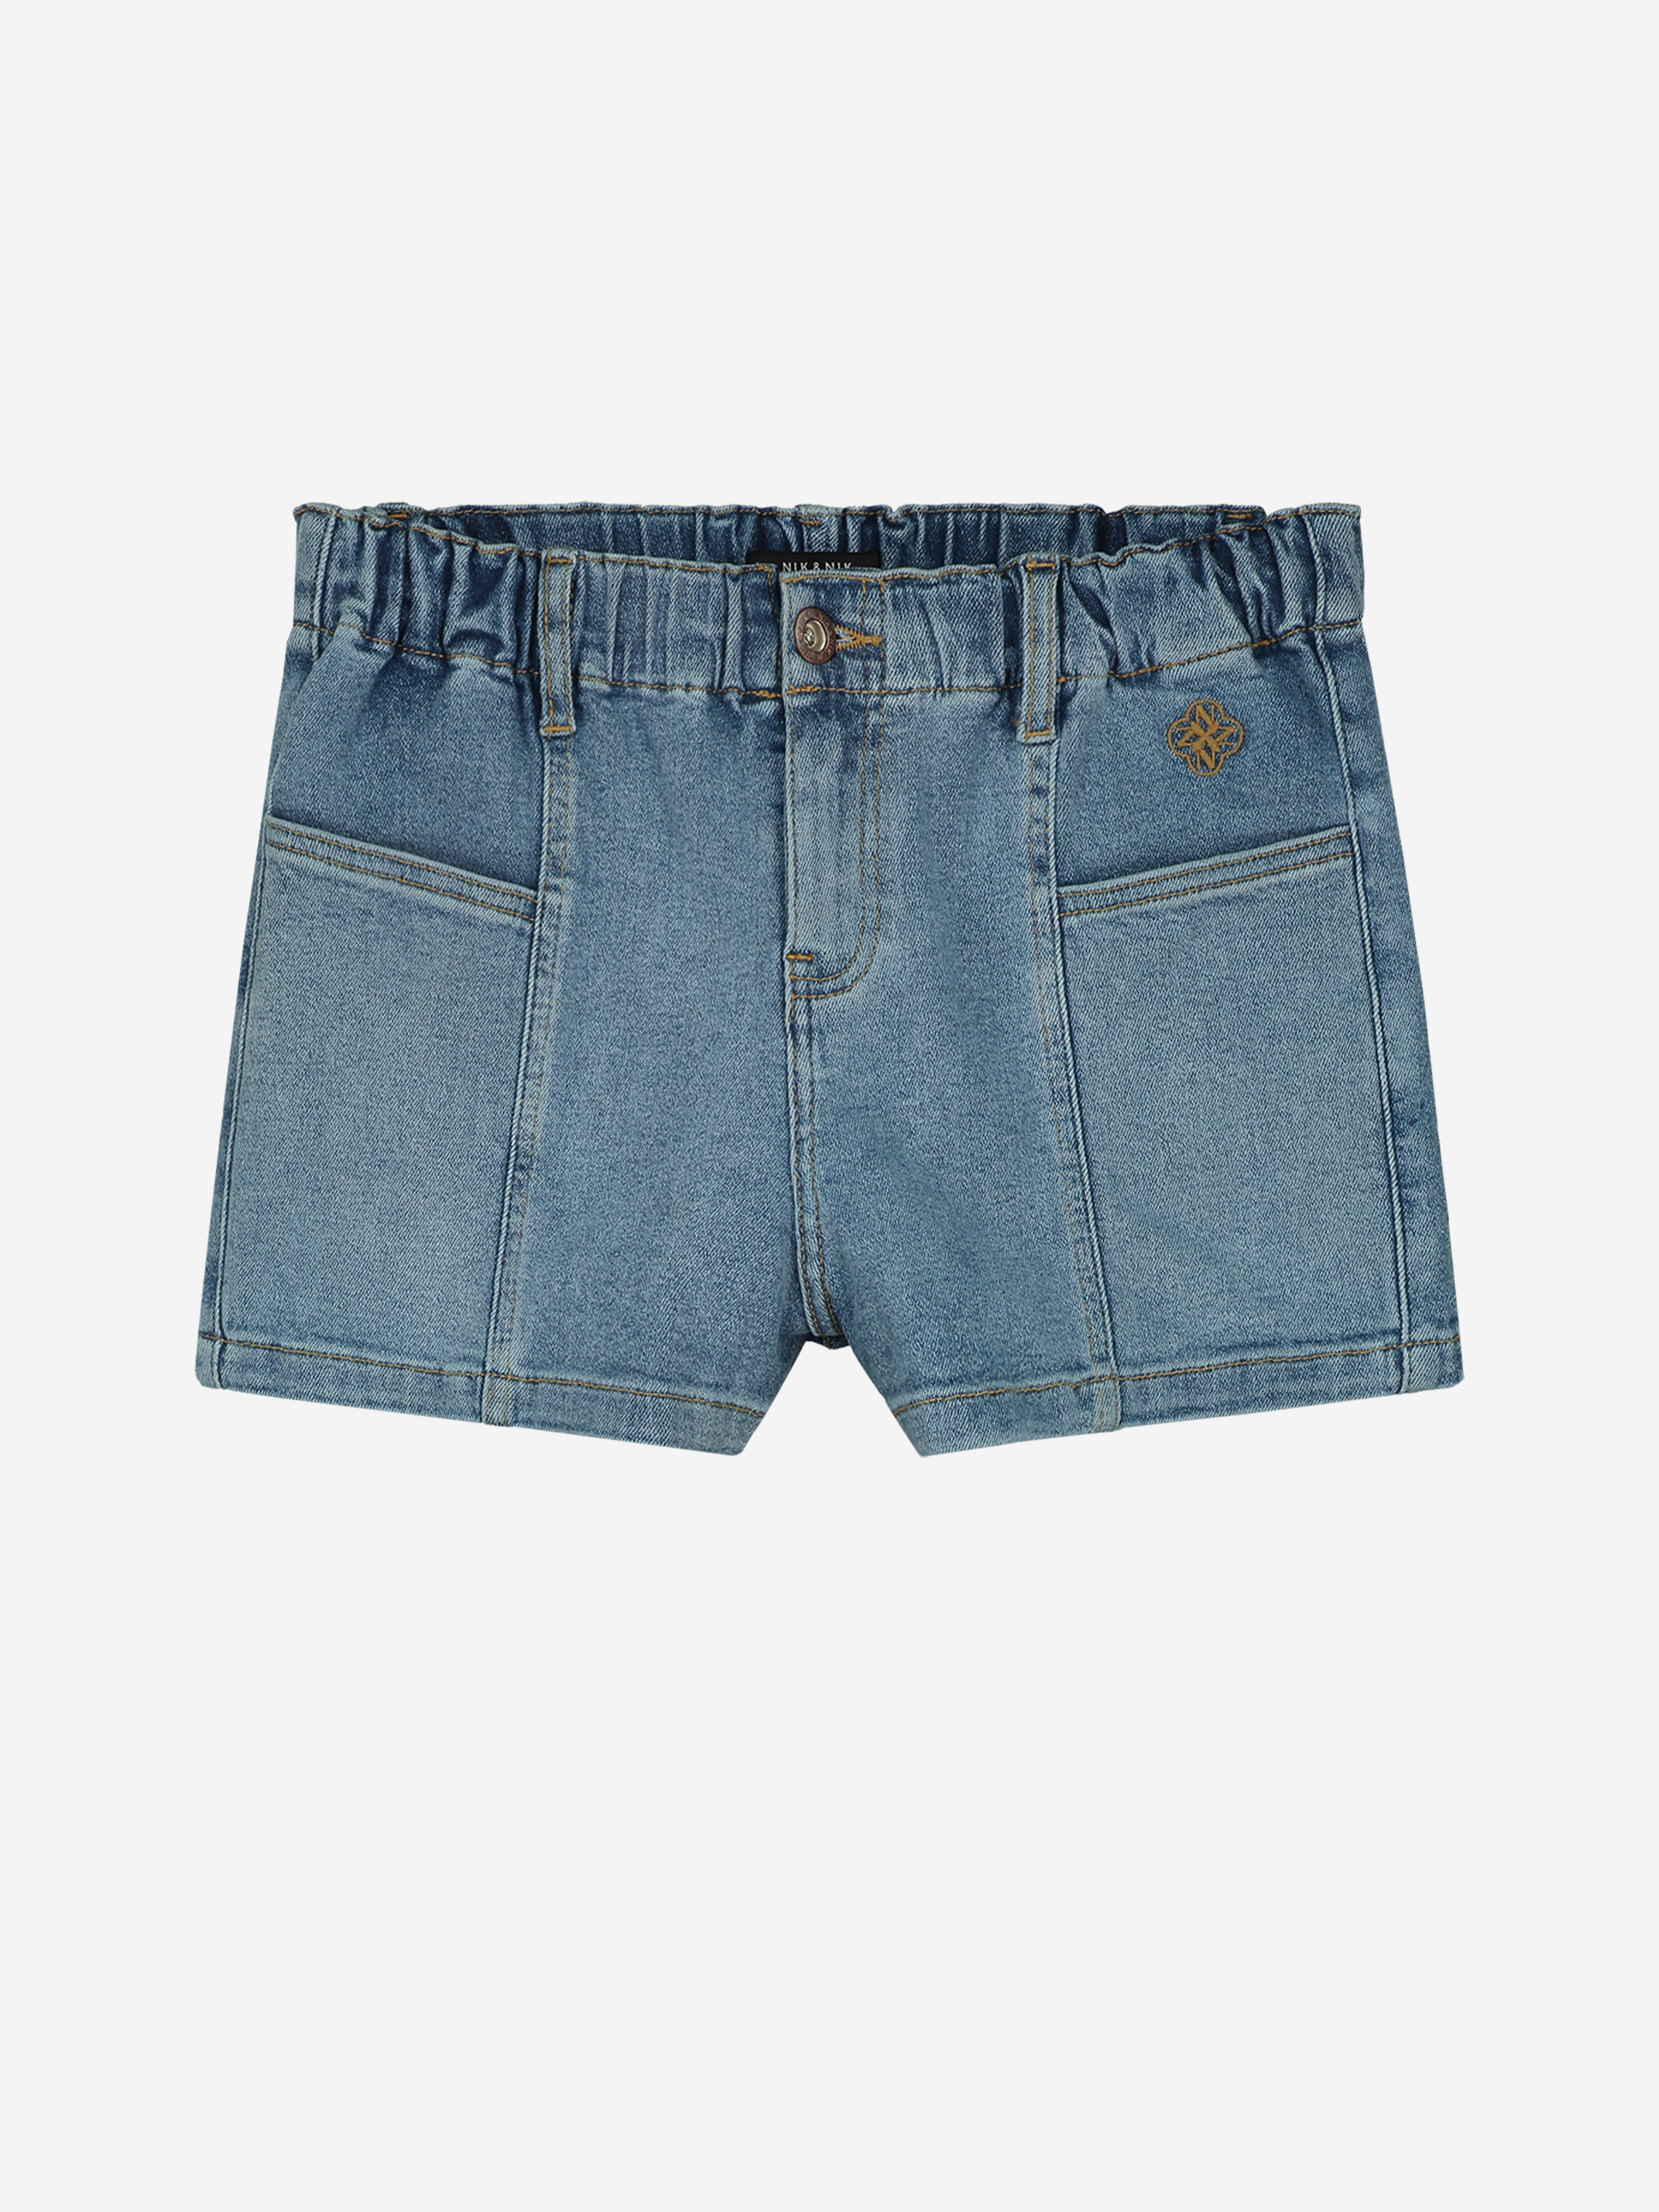 Vintage Blue Denim shorts 